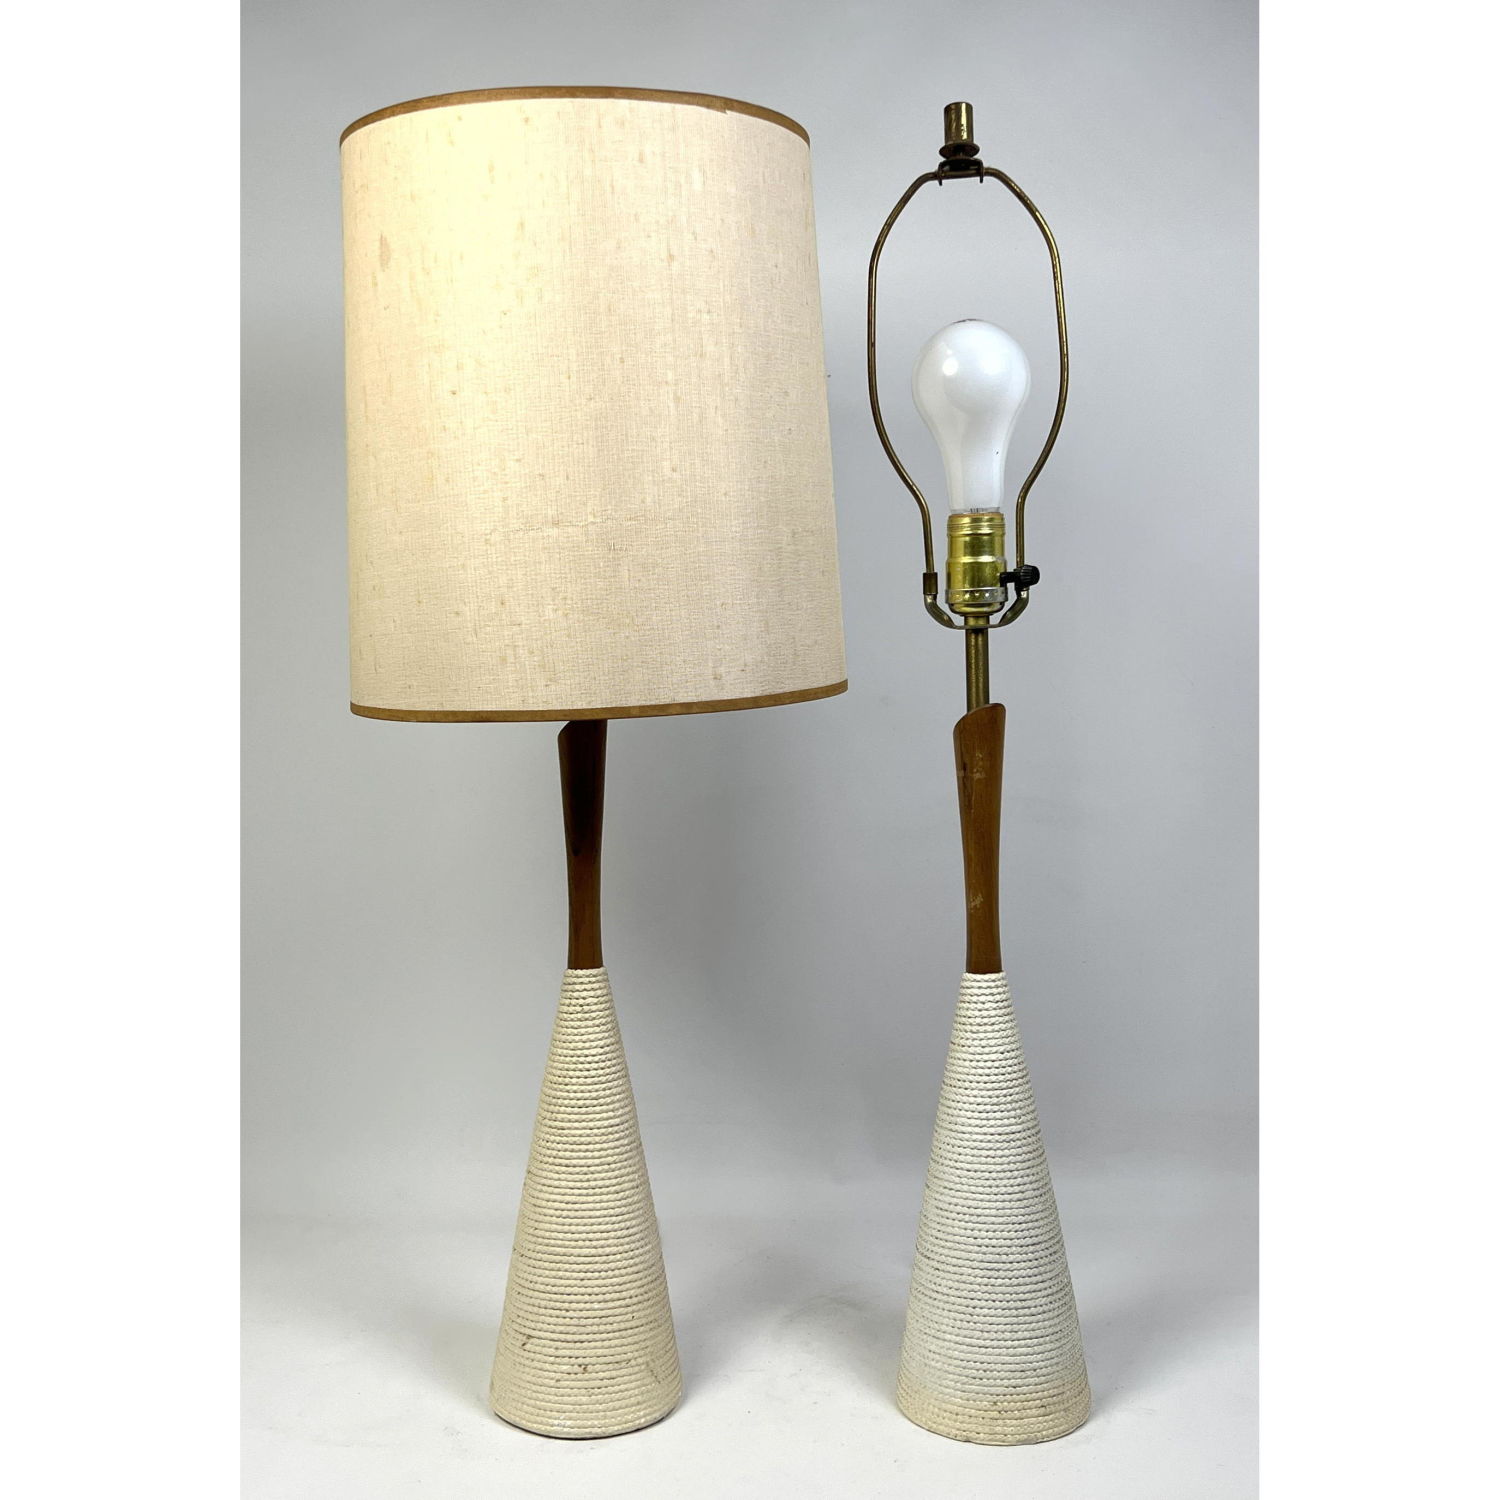 Pr Mid Century Modern Table Lamps.